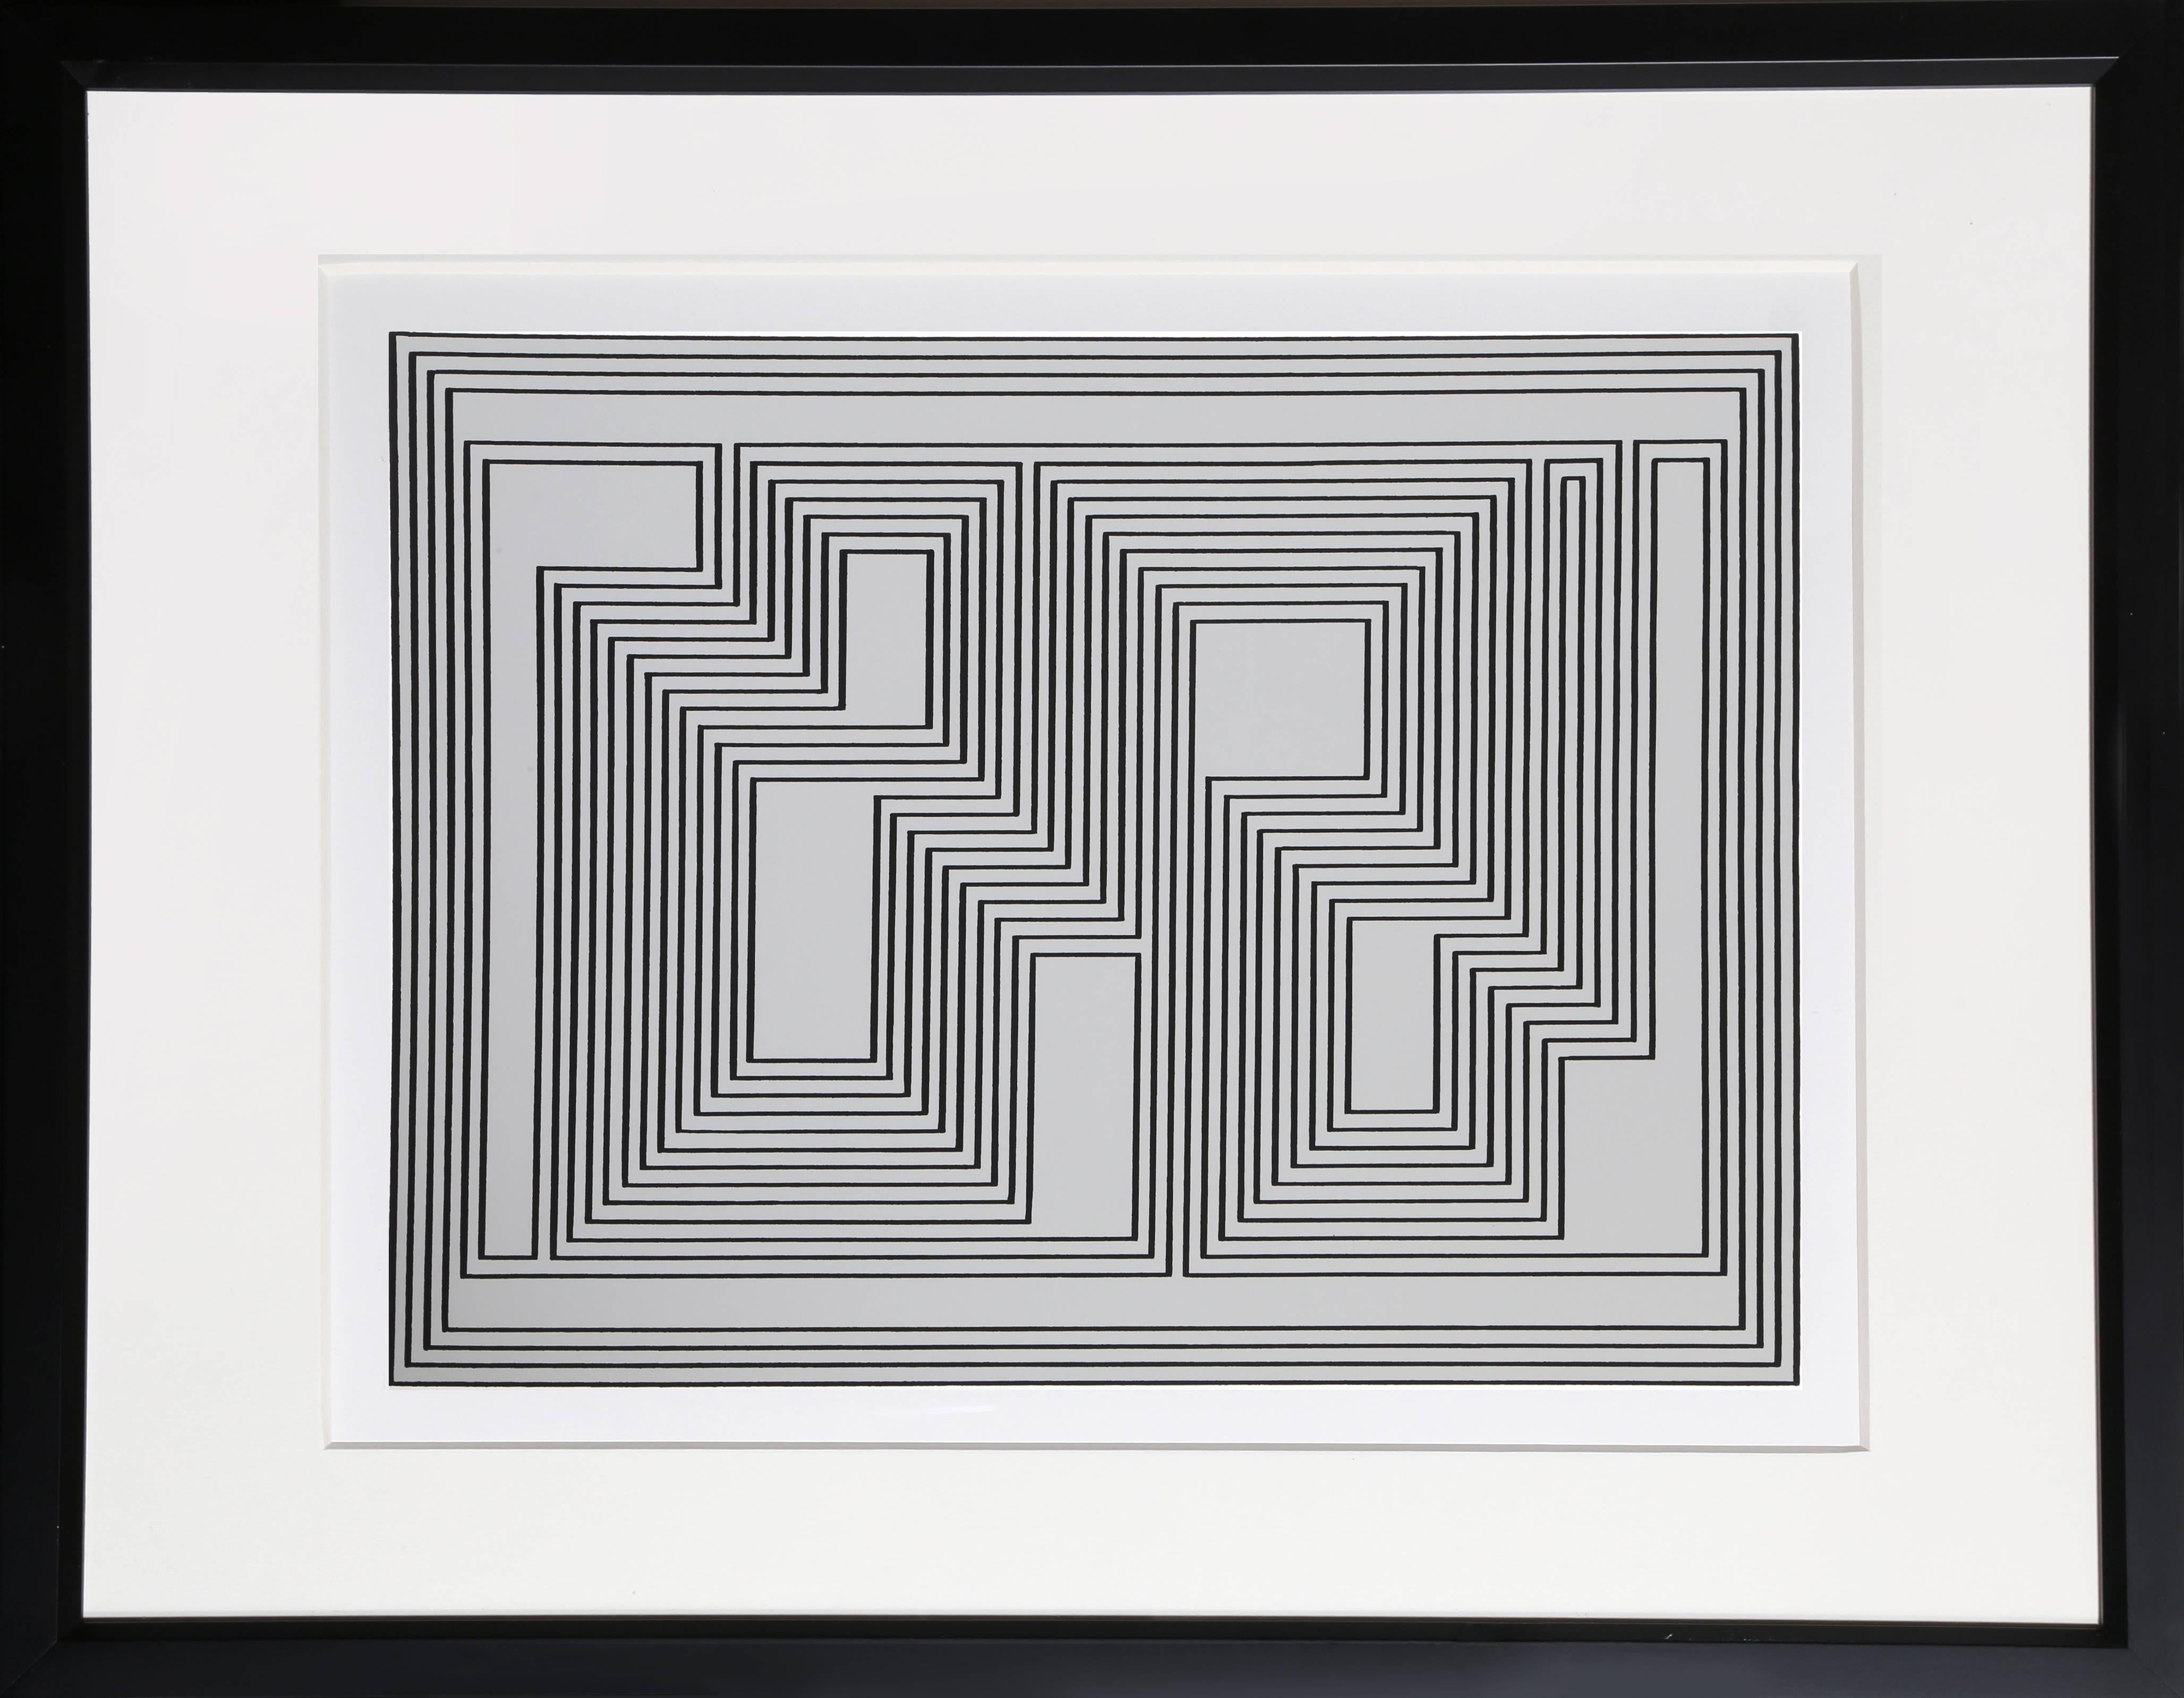 Josef Albers Abstract Print - Graphic Tectonic: Prefacio - P1, F32, I1